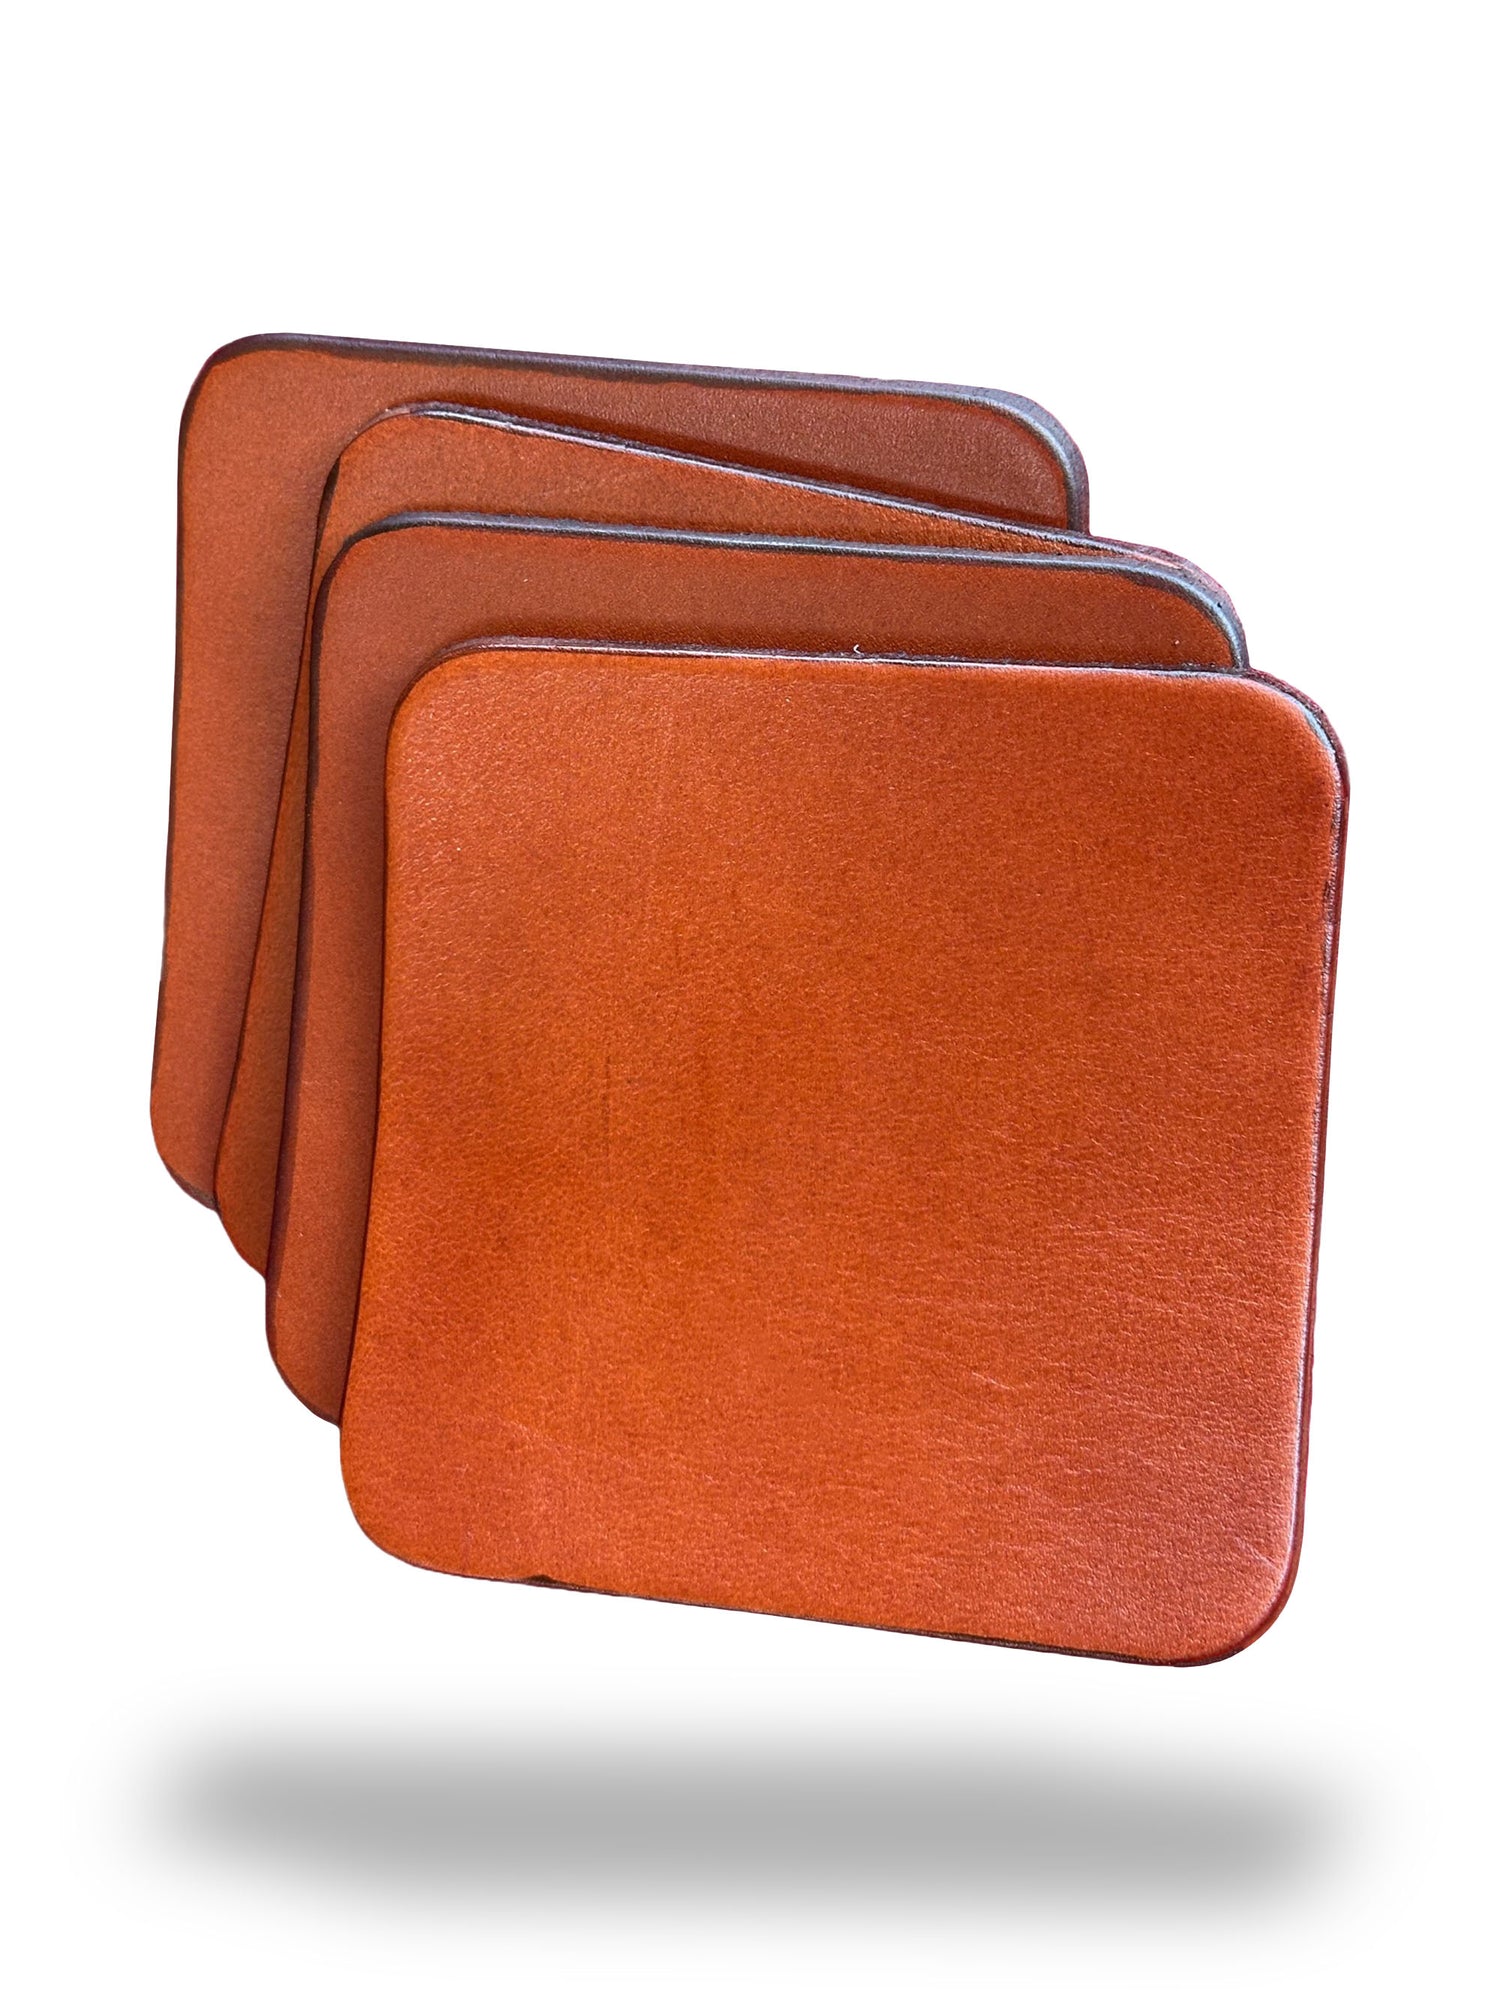 Square Leather Coasters, Plain, Customizable - Set of 4